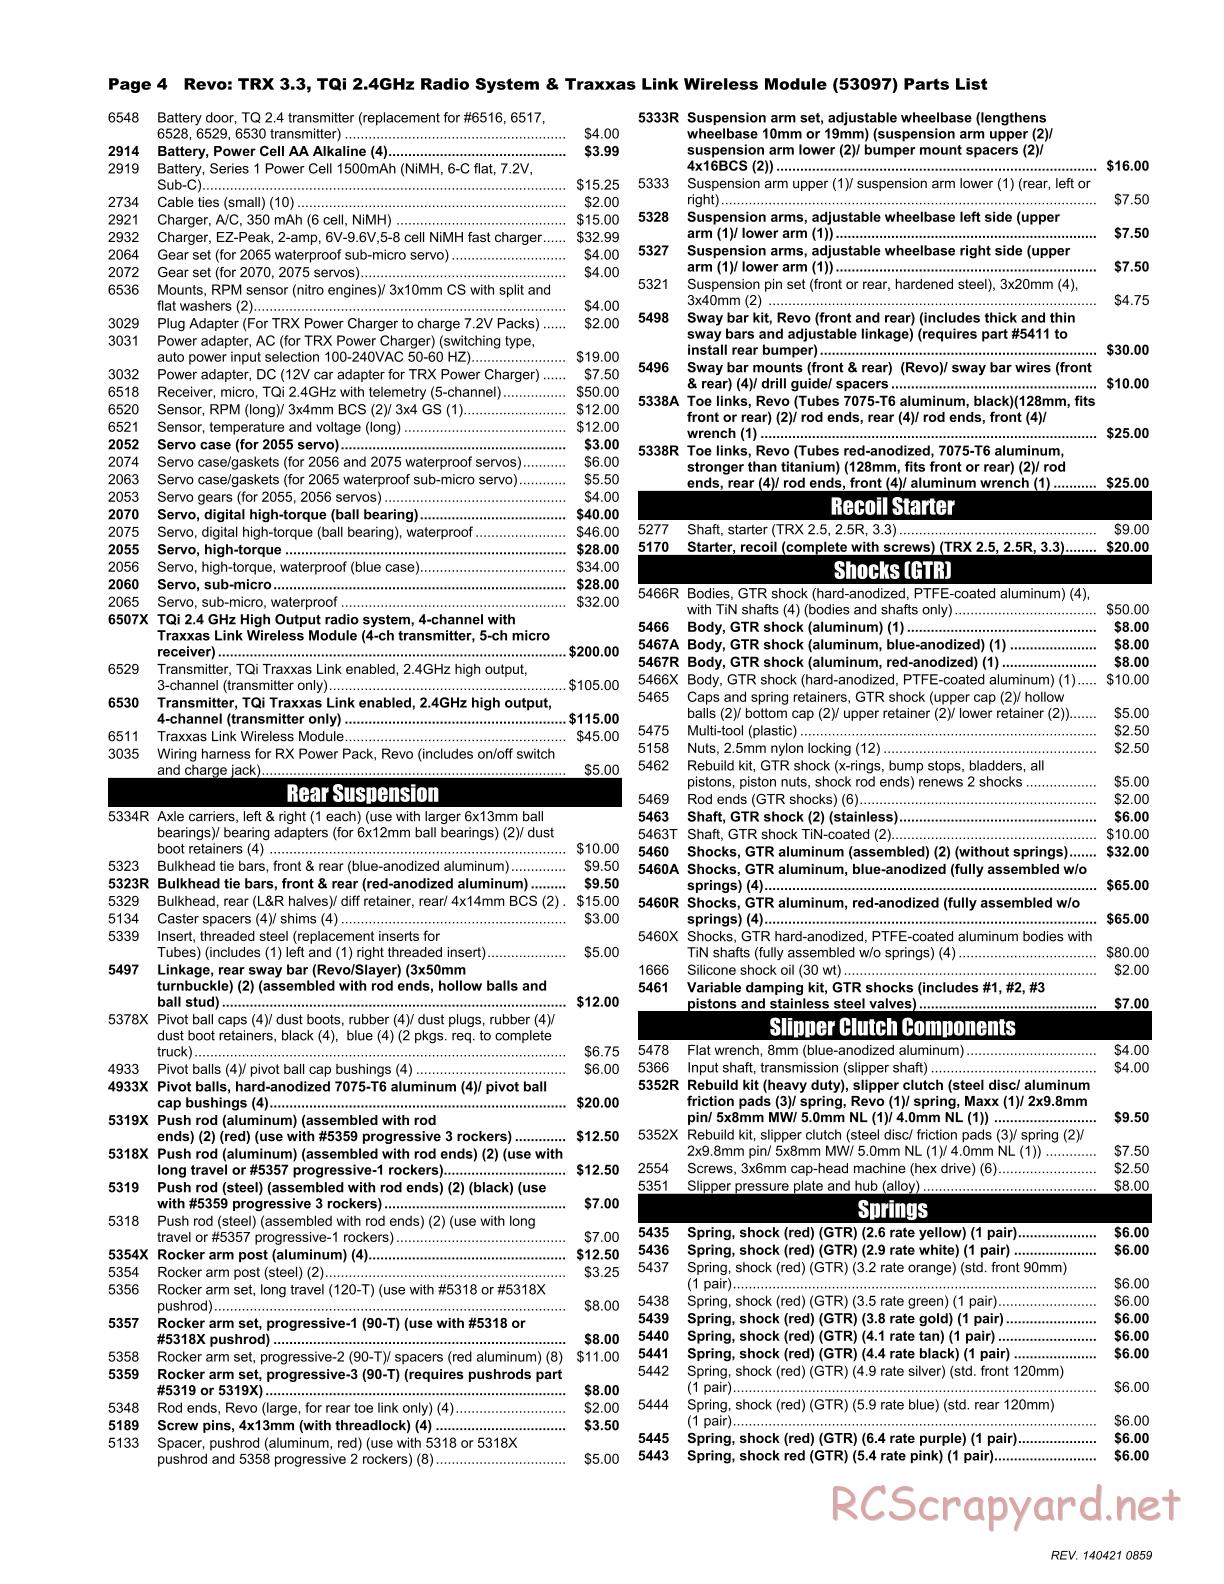 Traxxas - Revo 3.3 (2014) - Parts List - Page 4